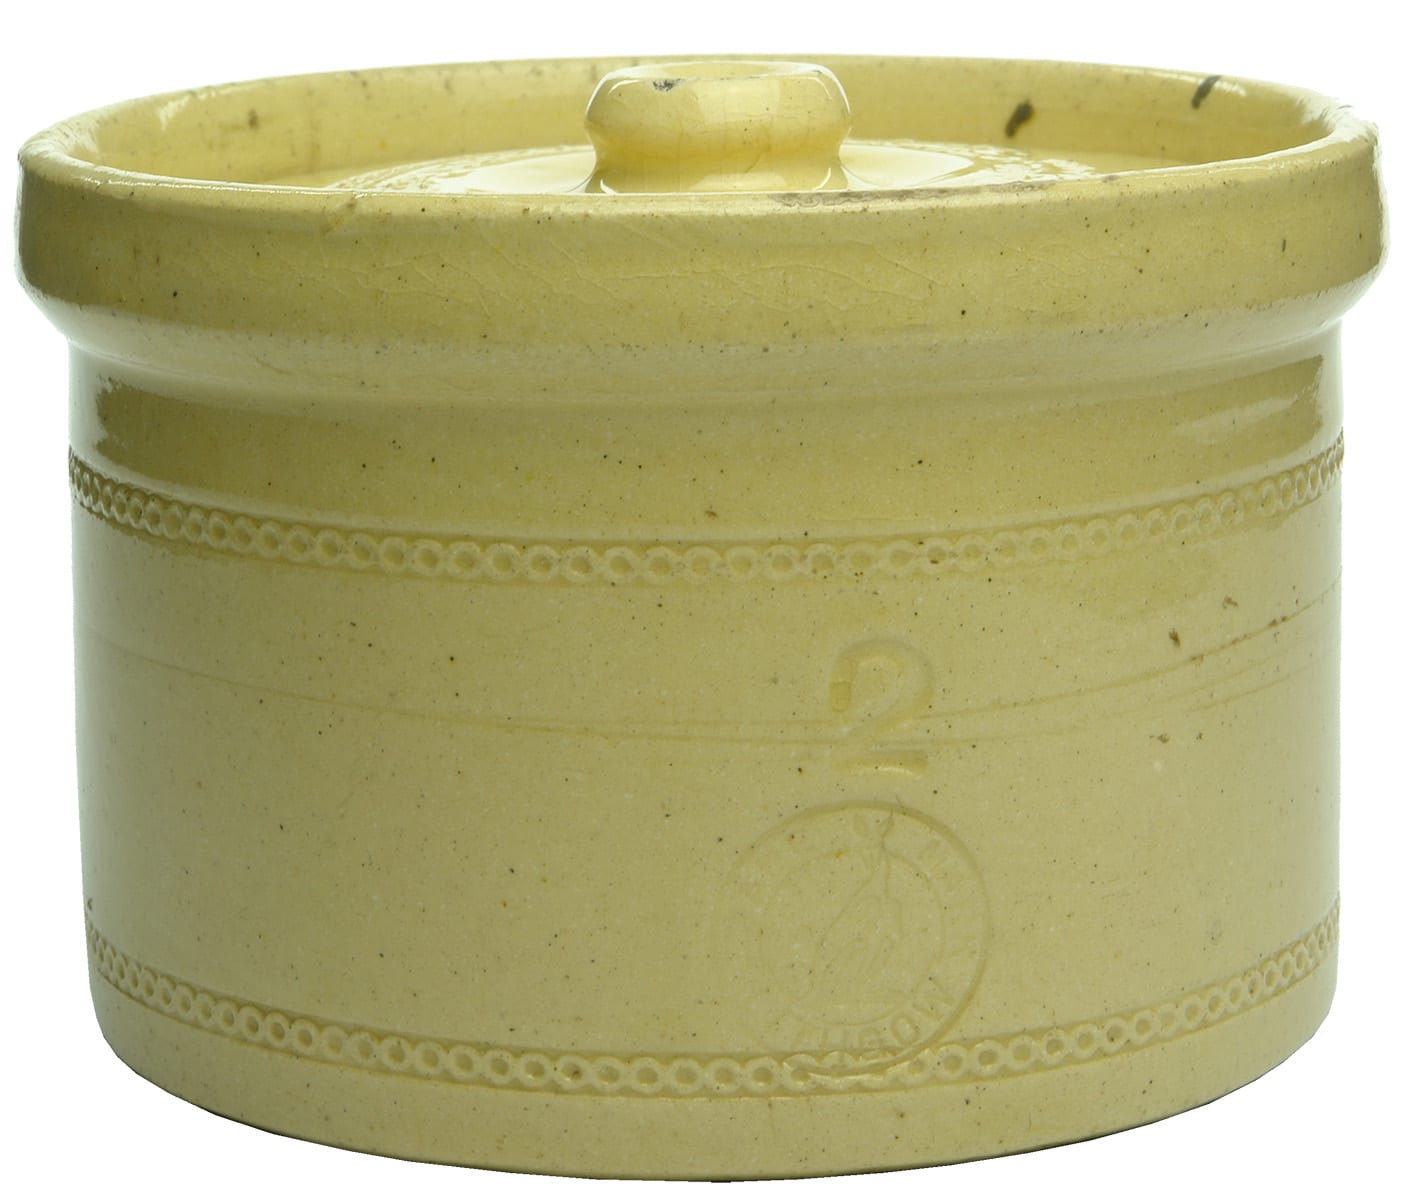 Lithgow Kangaroo Caneware Pottery Jar